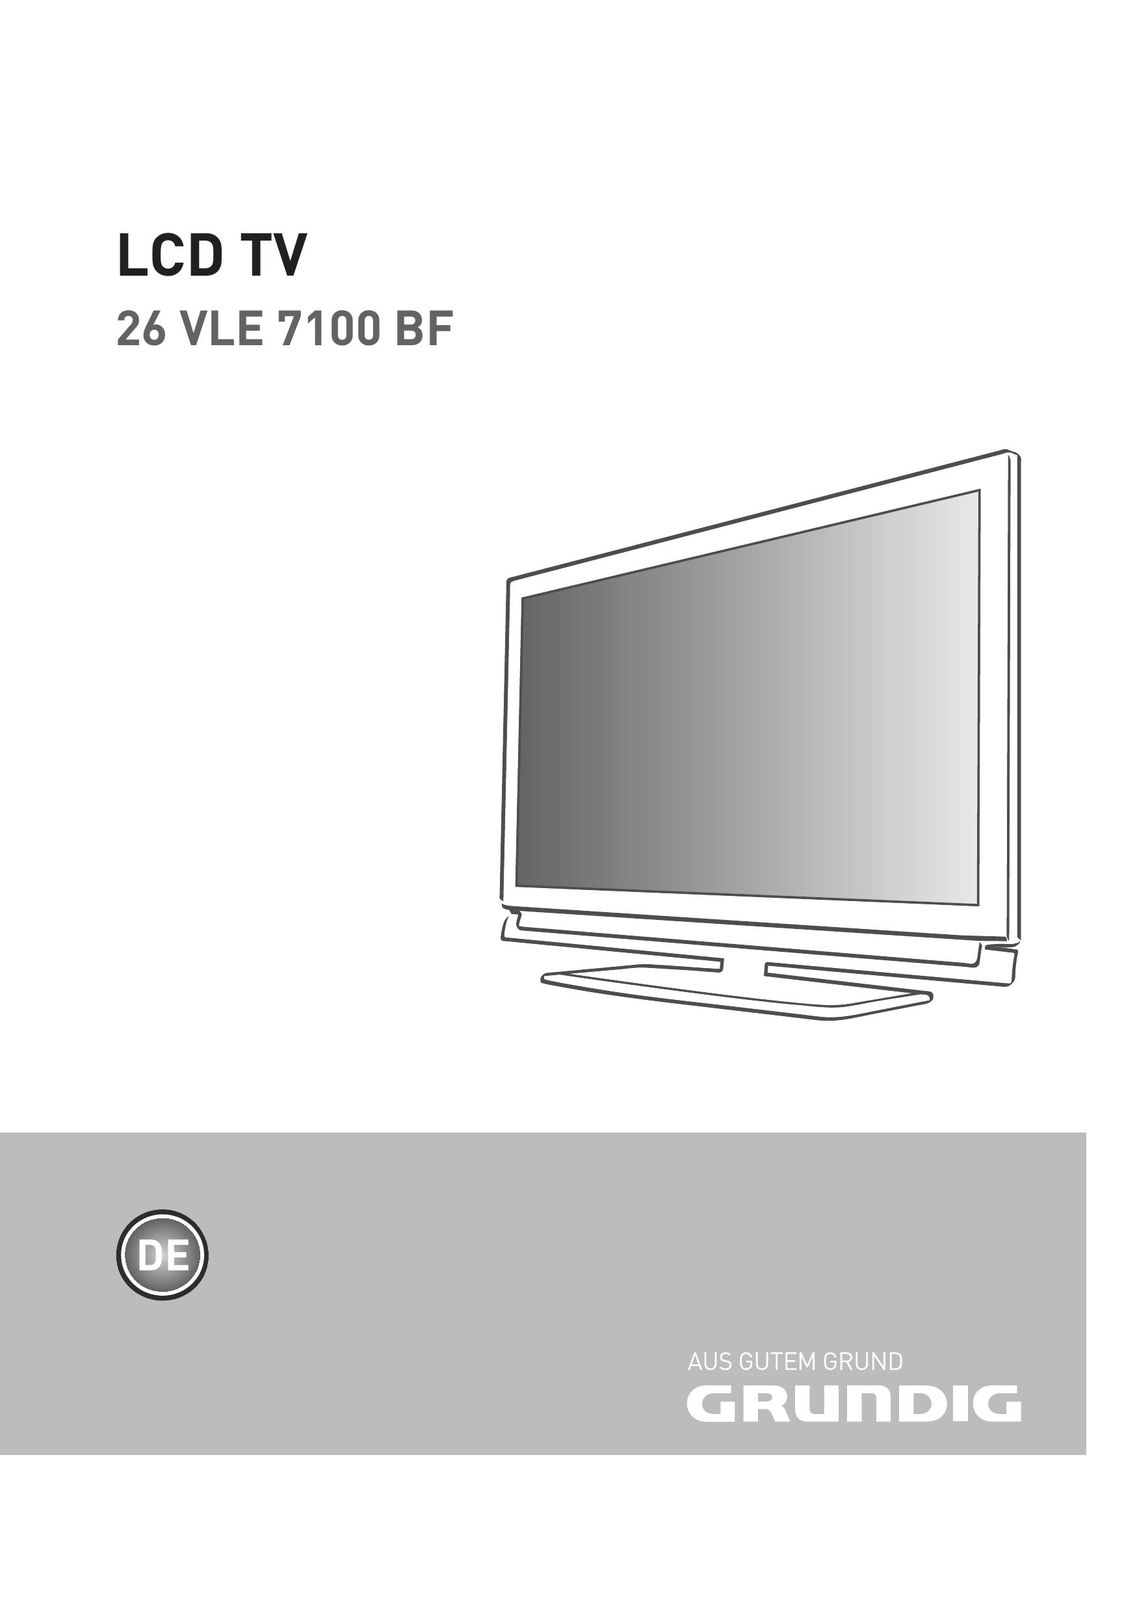 Grundig 26 VLE 7100 BF Flat Panel Television User Manual